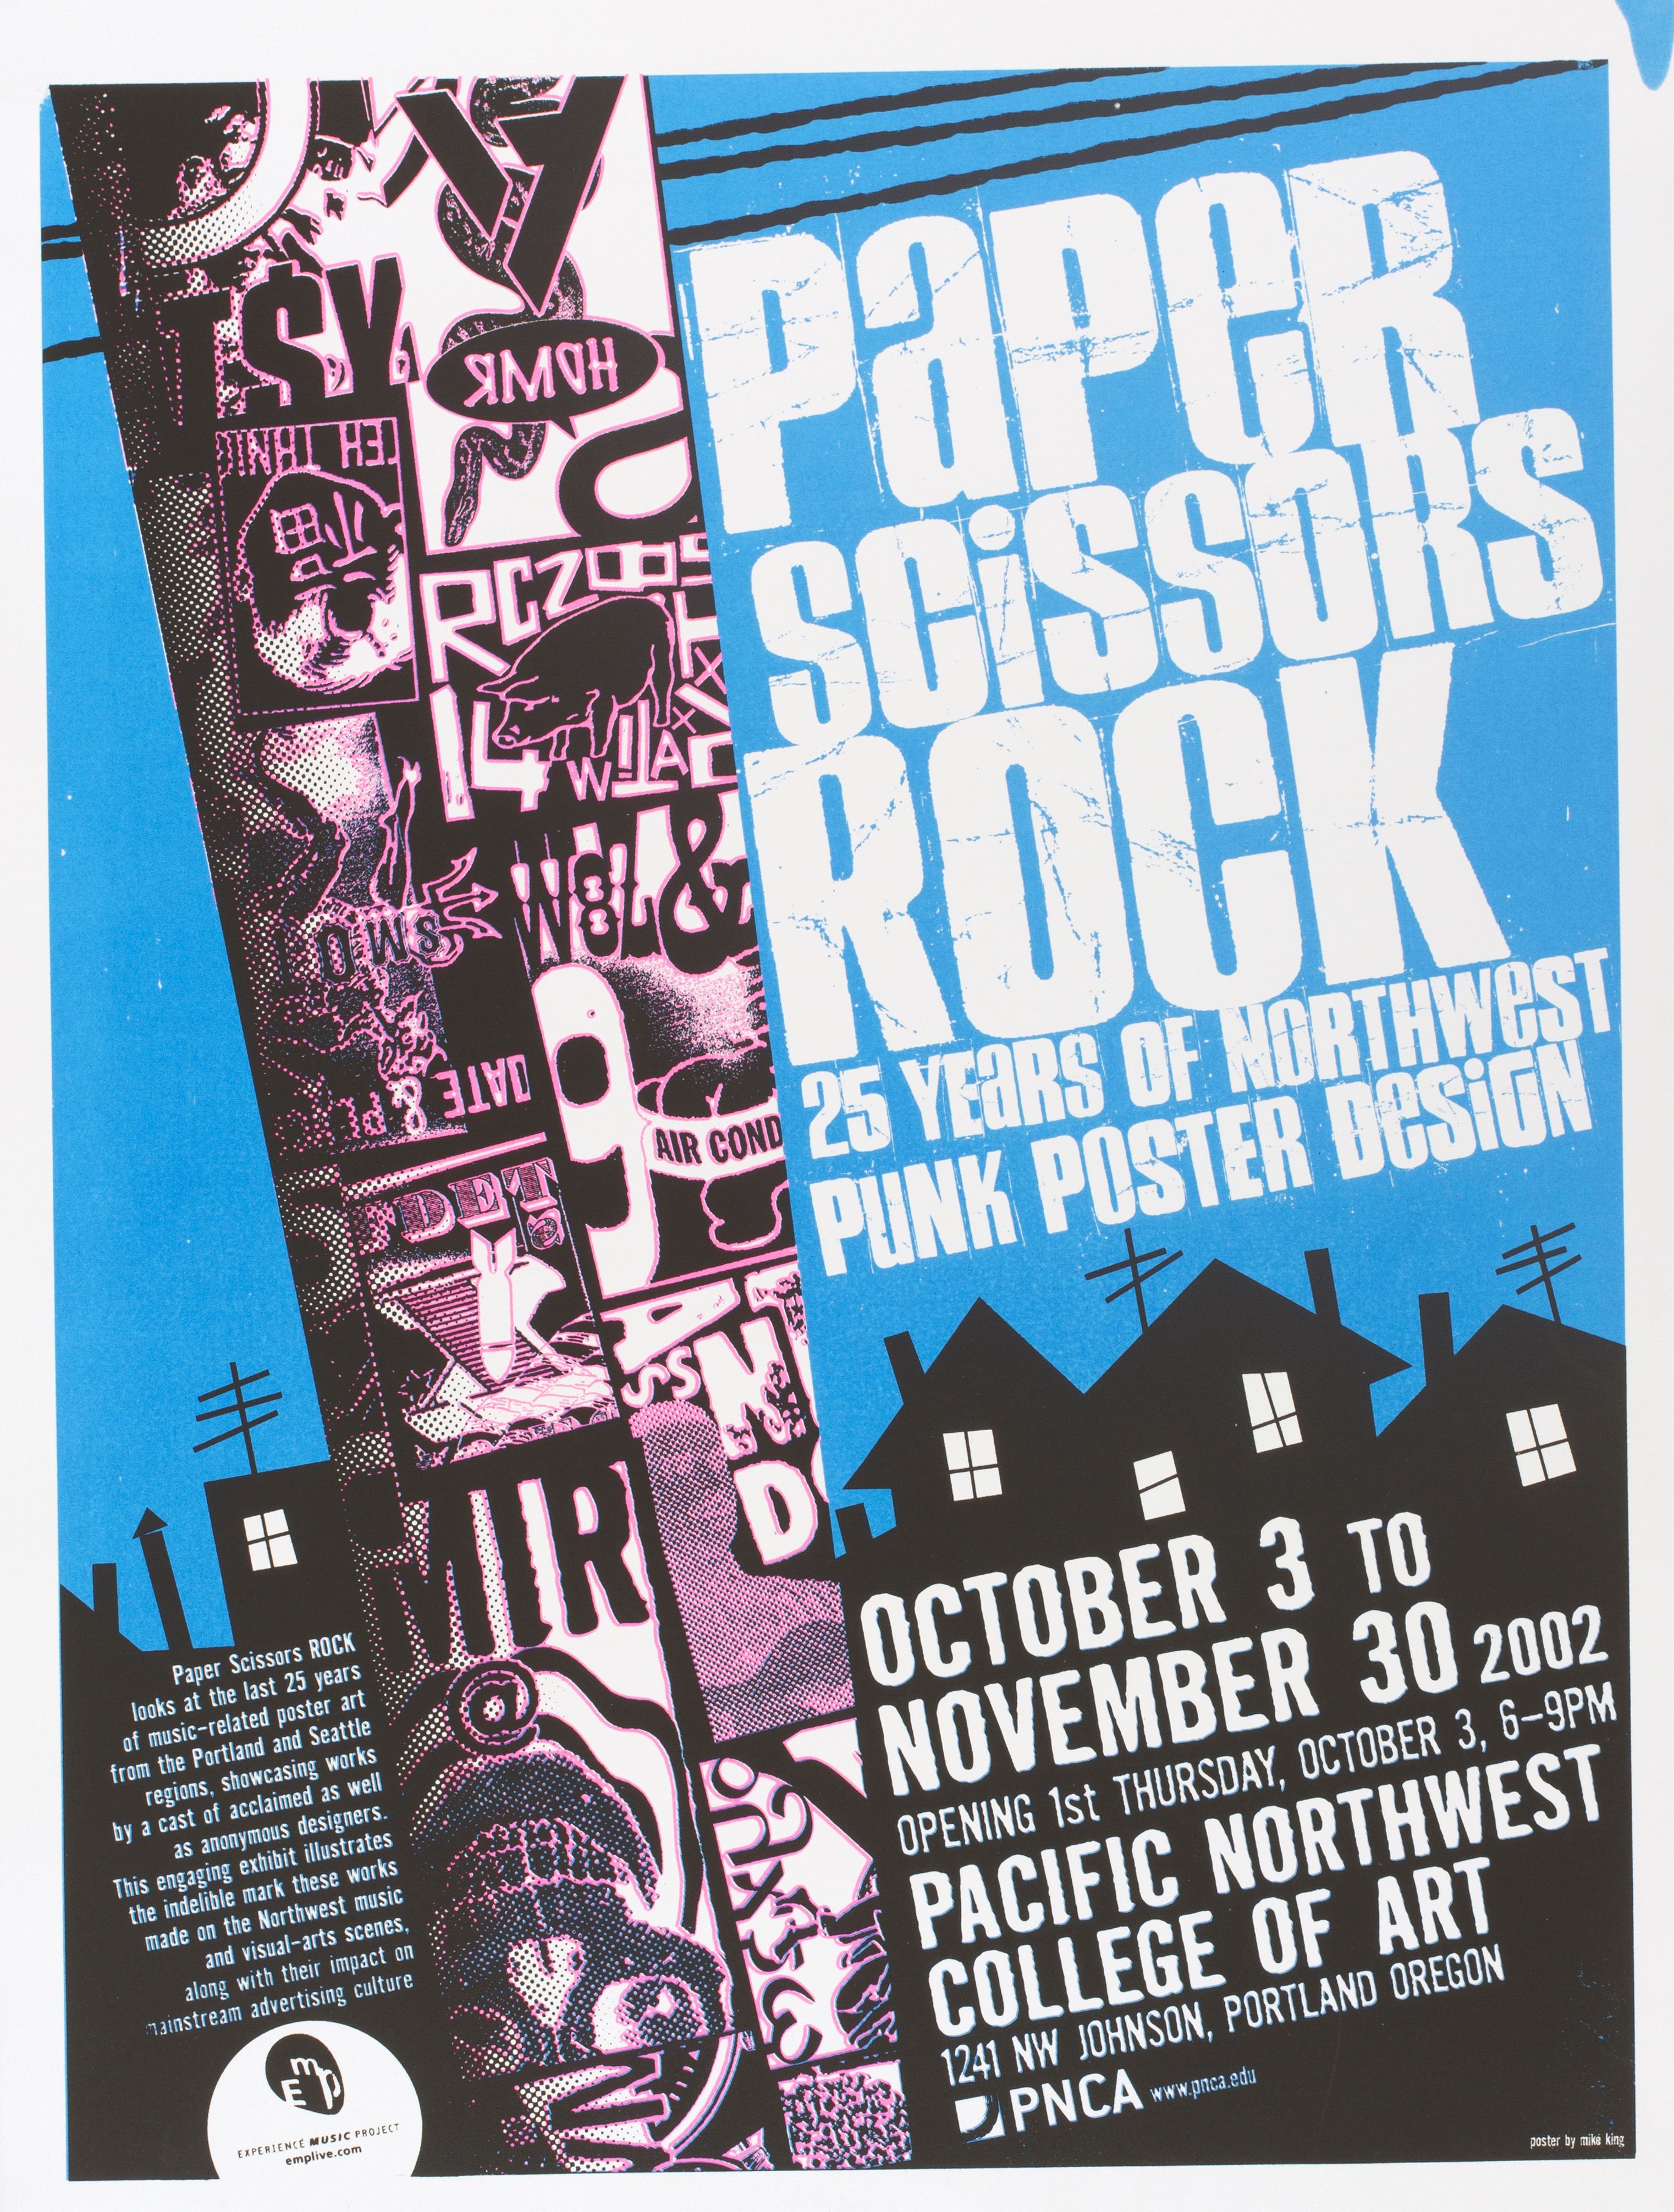 MXP-239.2 Paper Scissors Rock Art Show - Event 1989 Pnca  Sep 23 Concert Poster